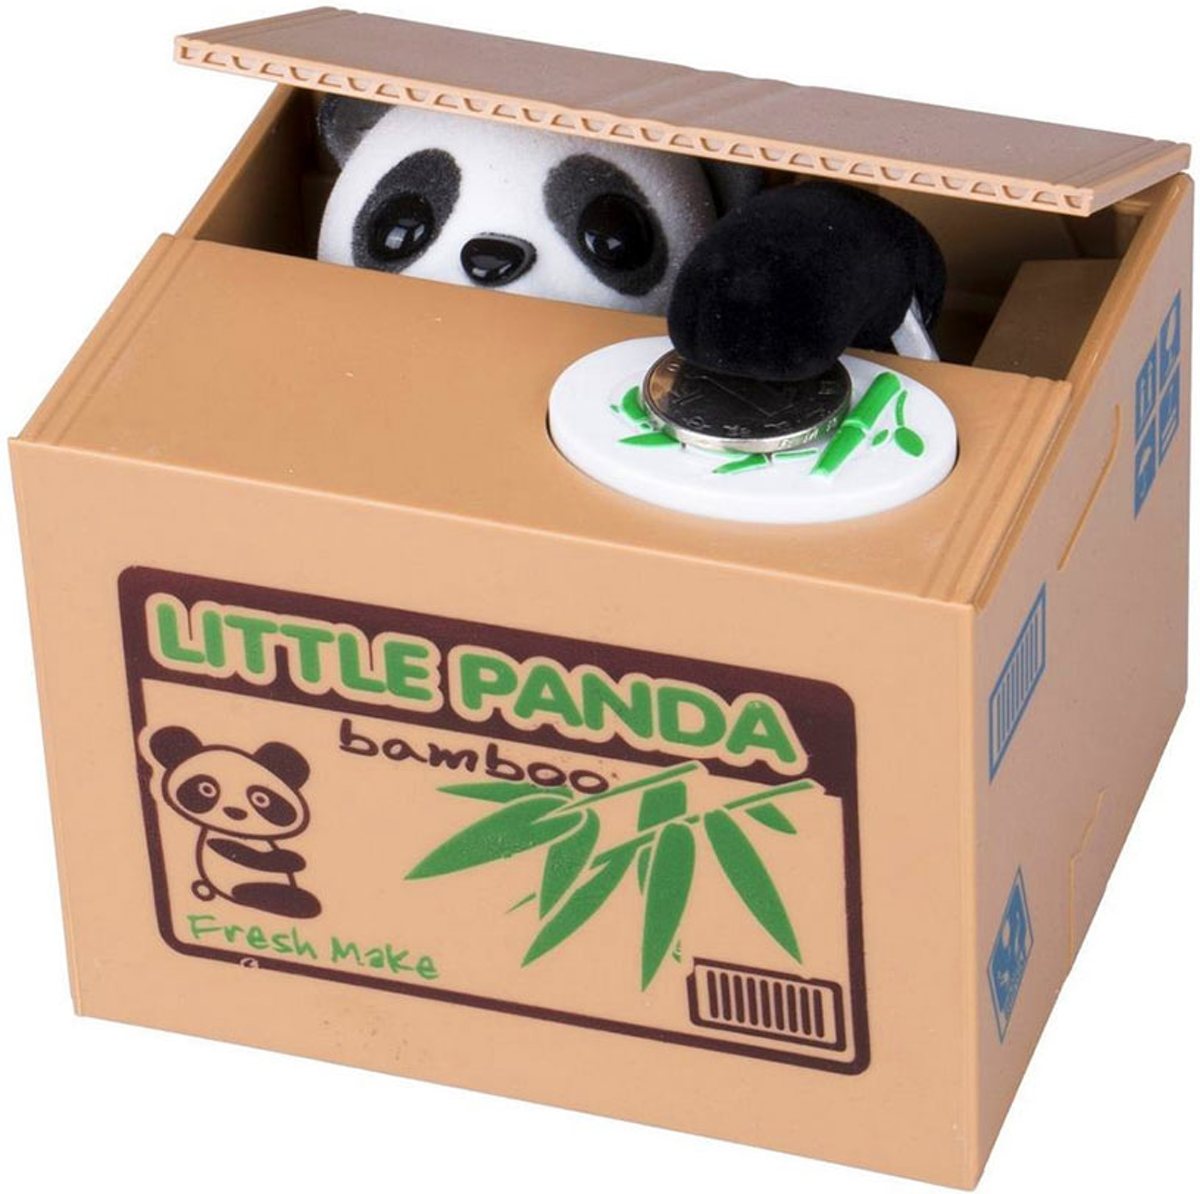 Panda spaarpot